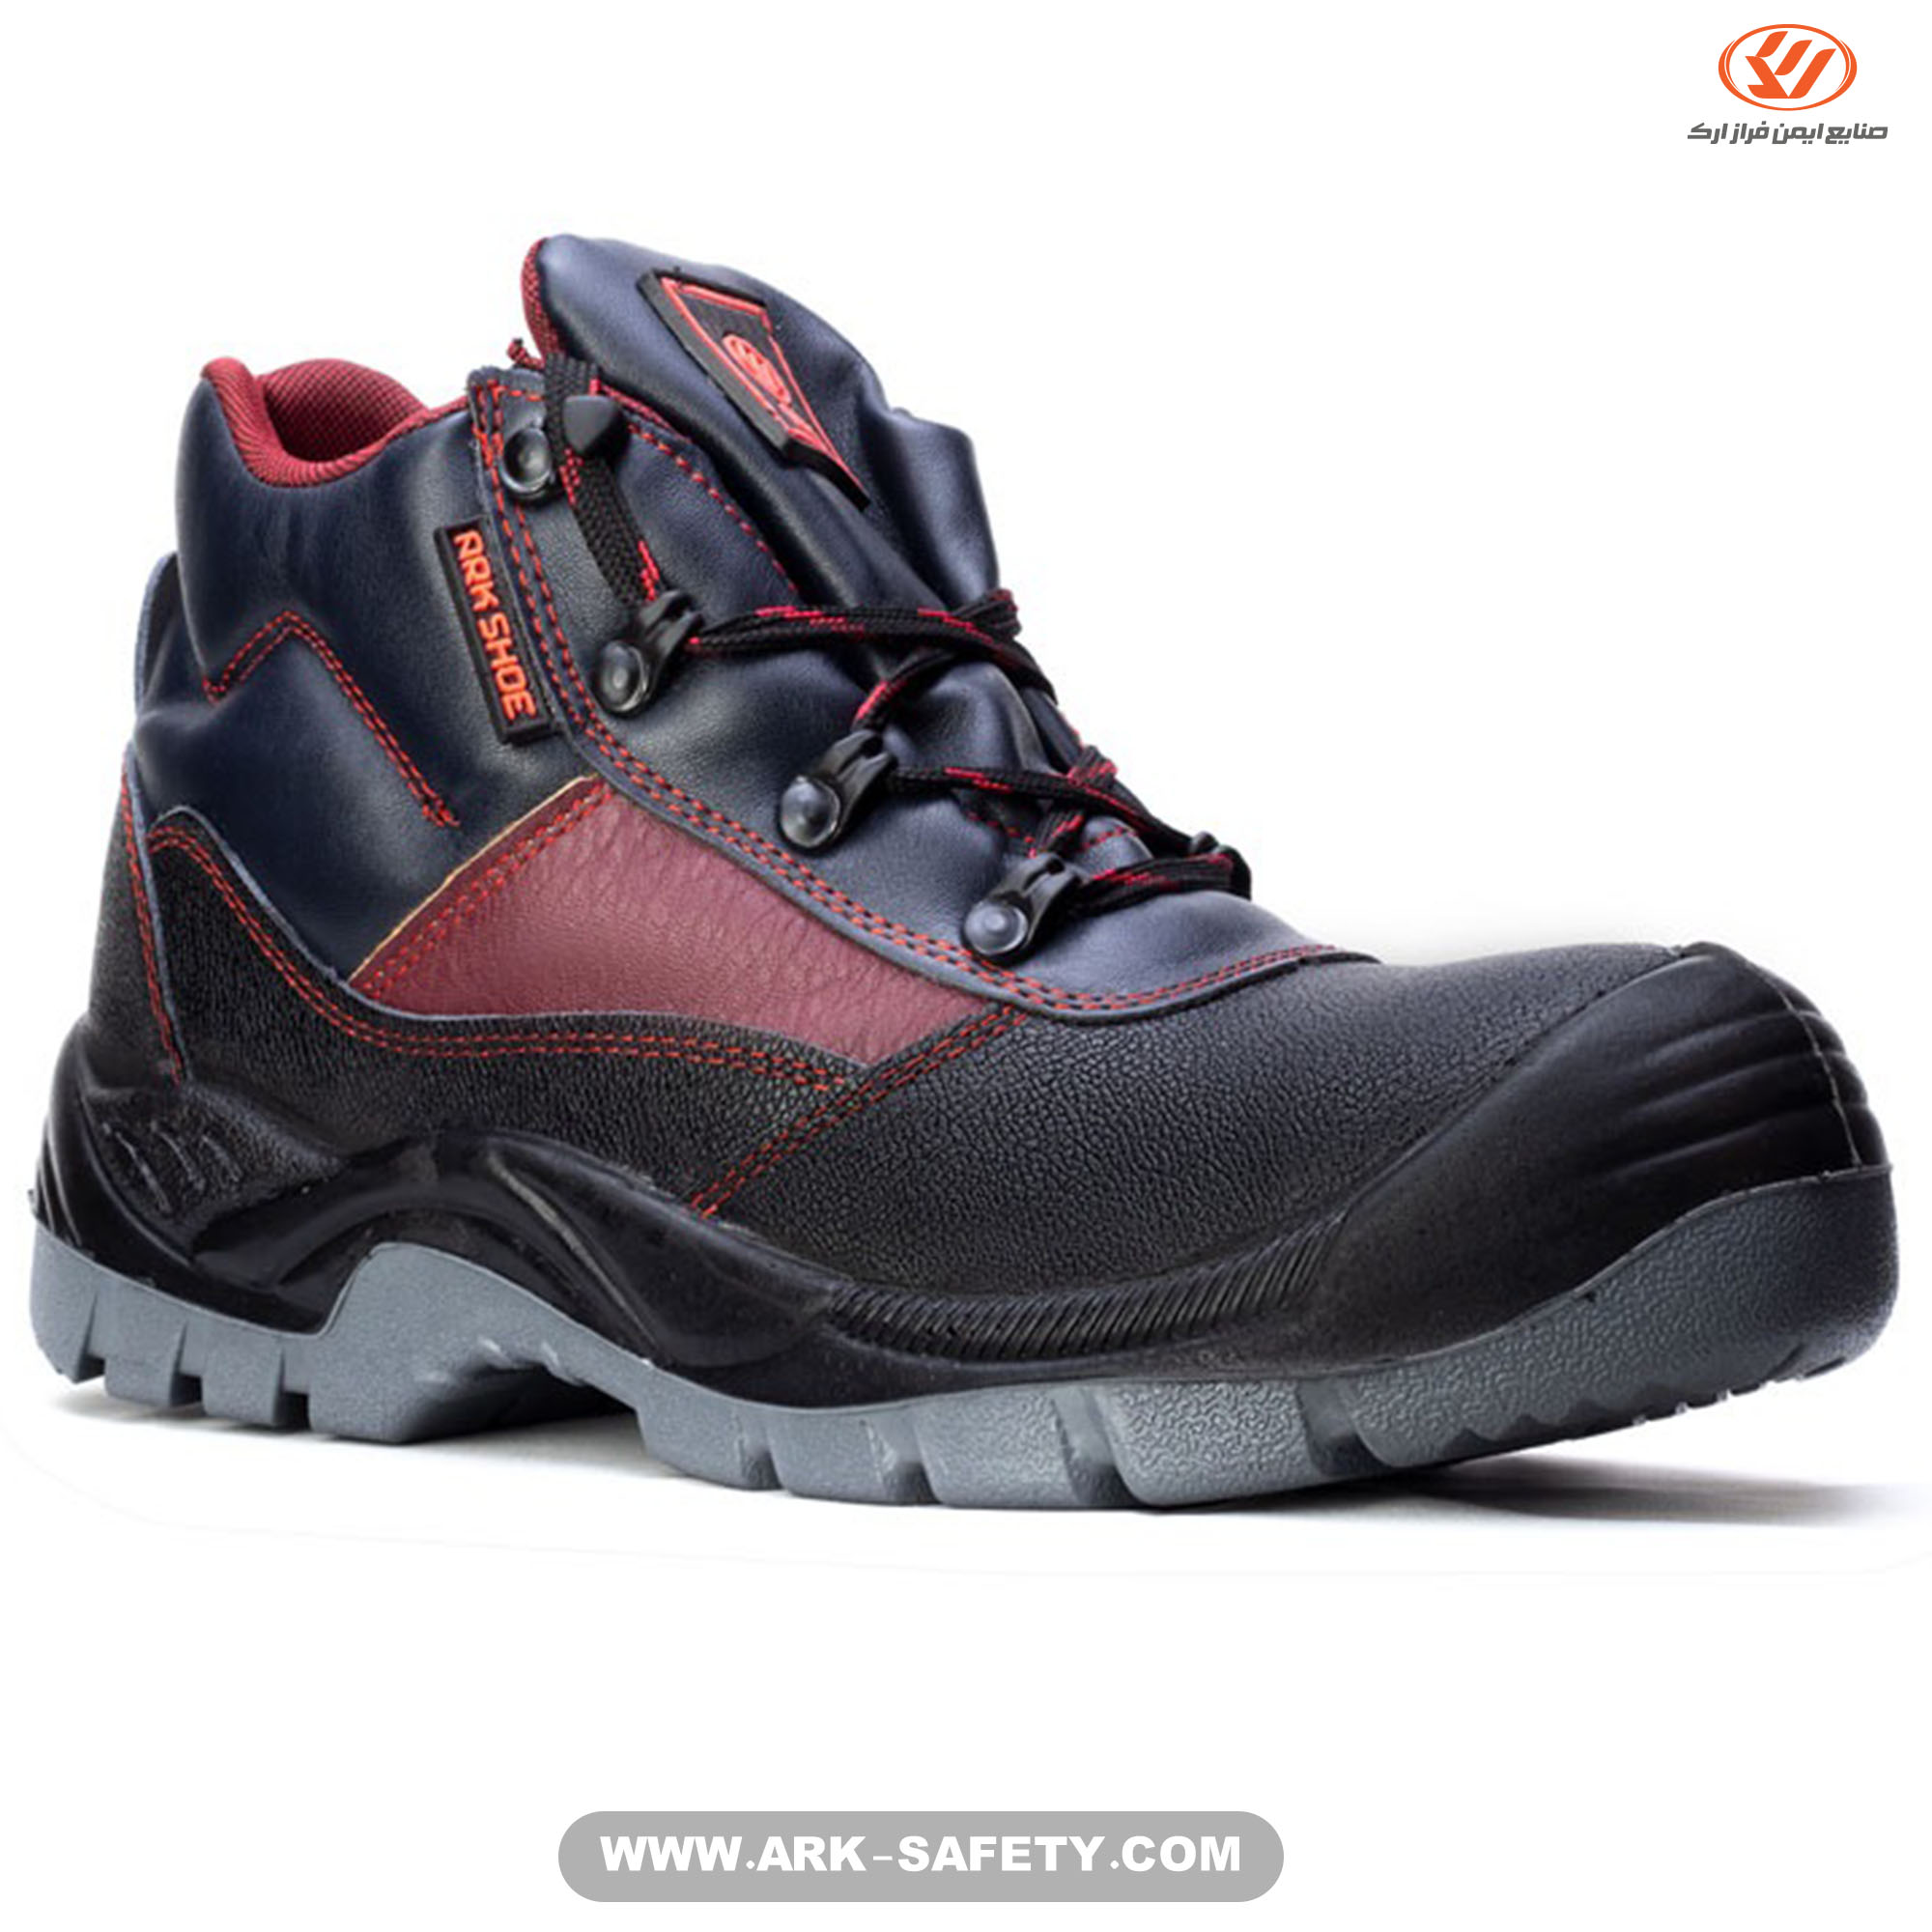 Kara Safety Boots